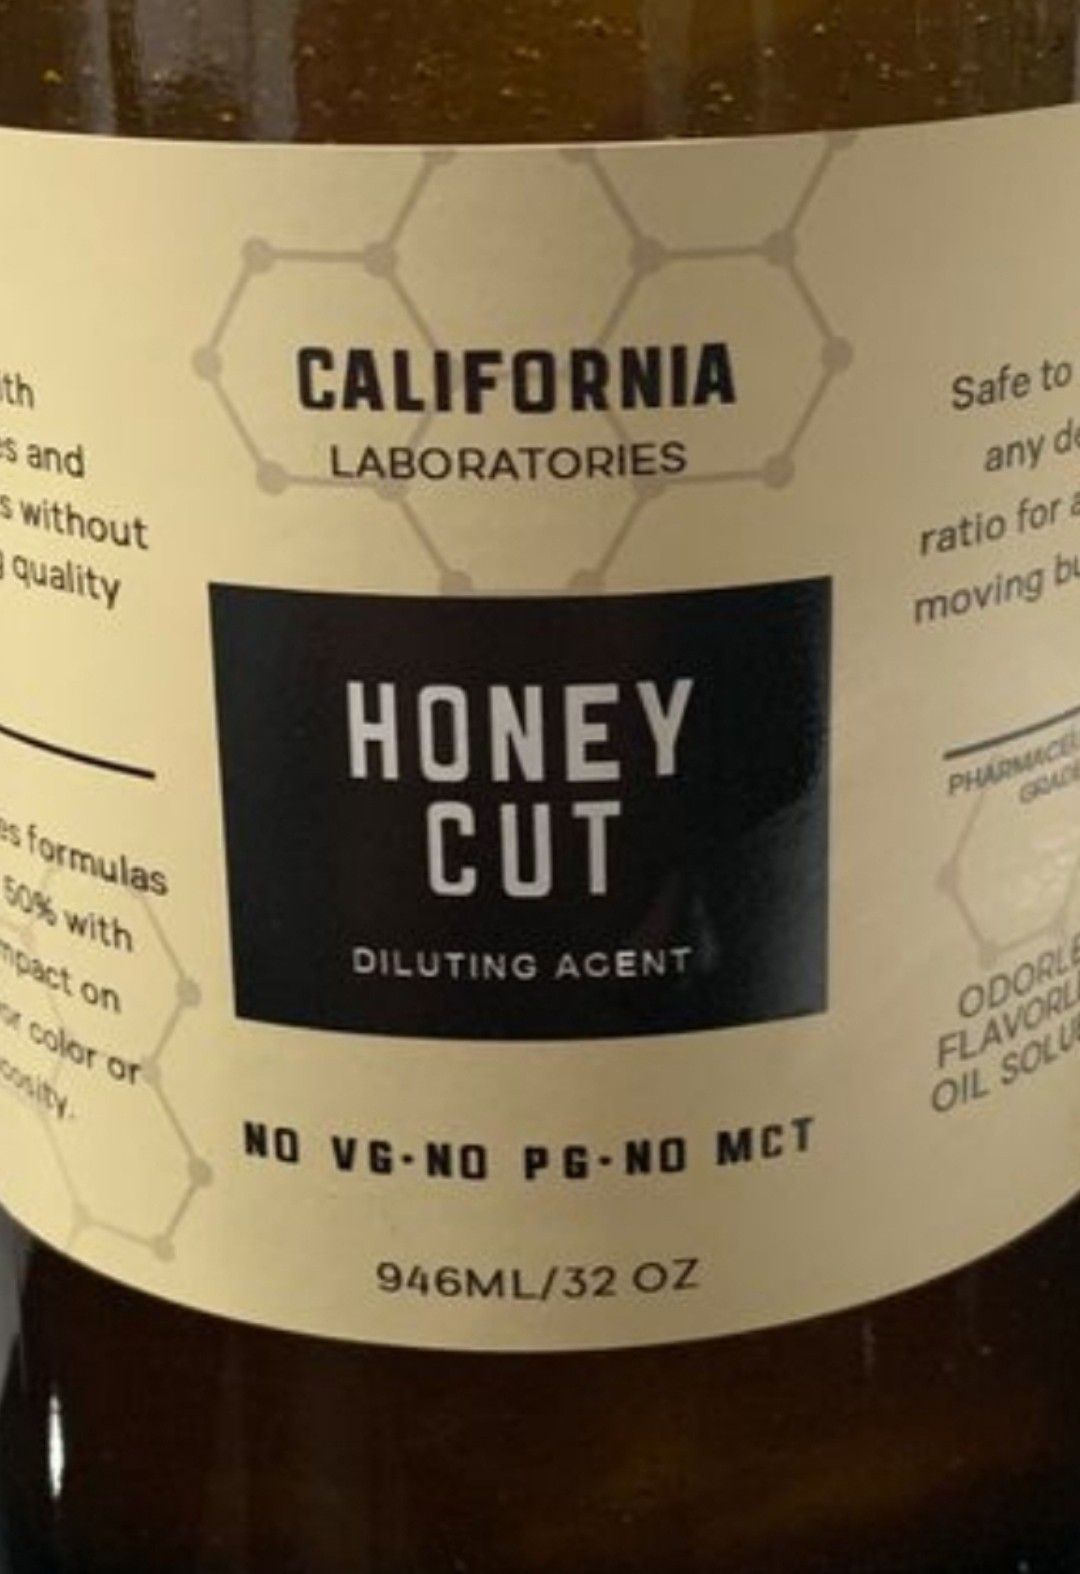 Honey cut diluting agent 964 ml / 32 ounces